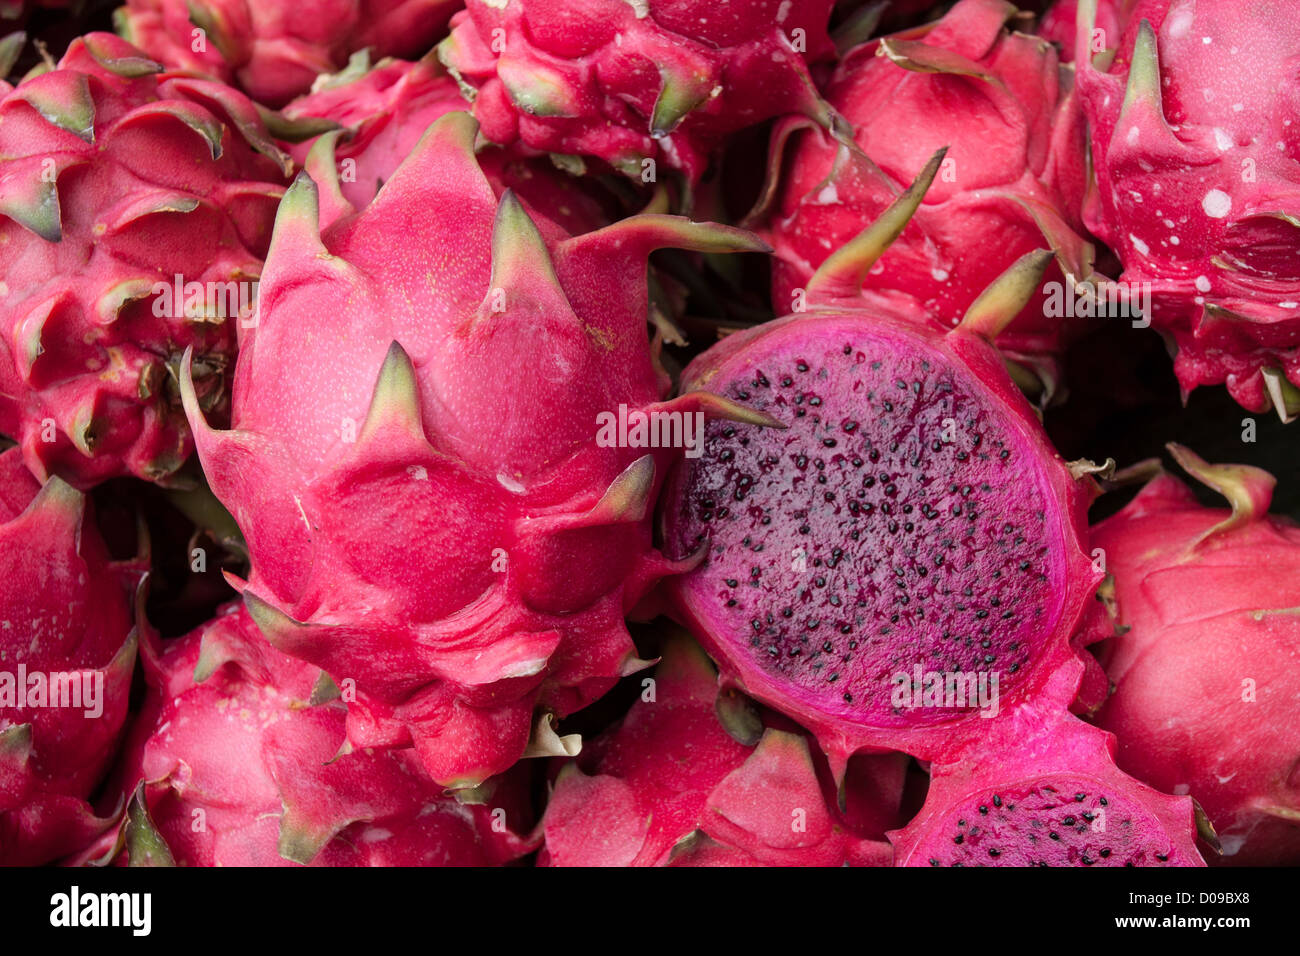 Rosa pitaya fotografías e imágenes de alta resolución - Alamy